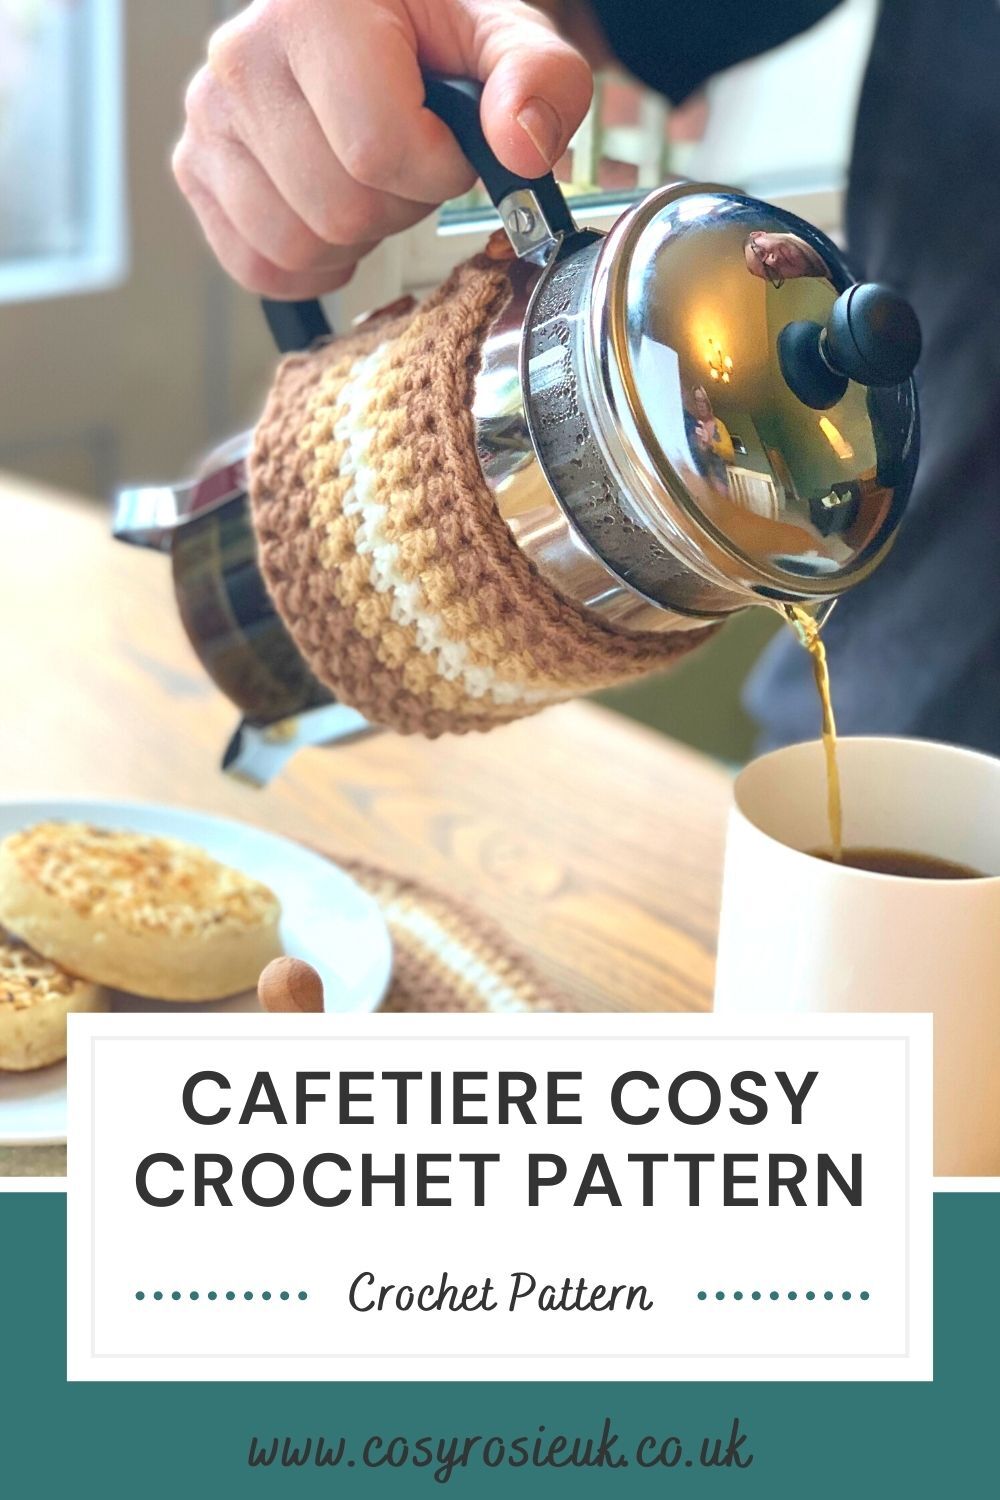 French Press Cosy Crochet Pattern